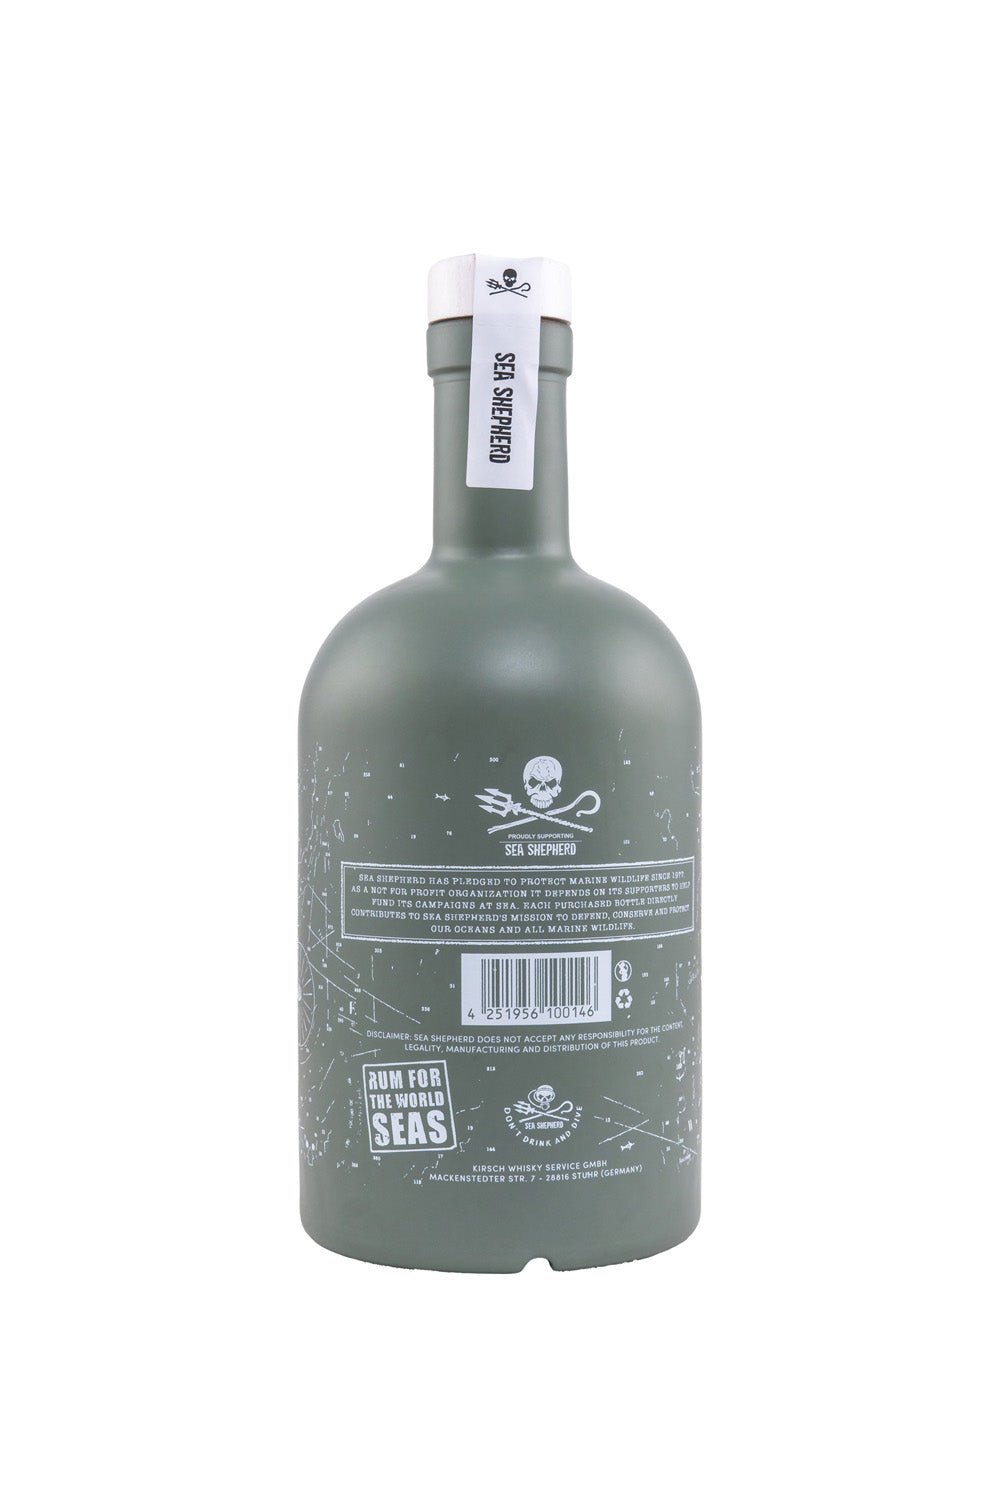 Sea Shepherd Rum - A fine blend of Caribbean Rums 40% vol. 700ml - Maltimore